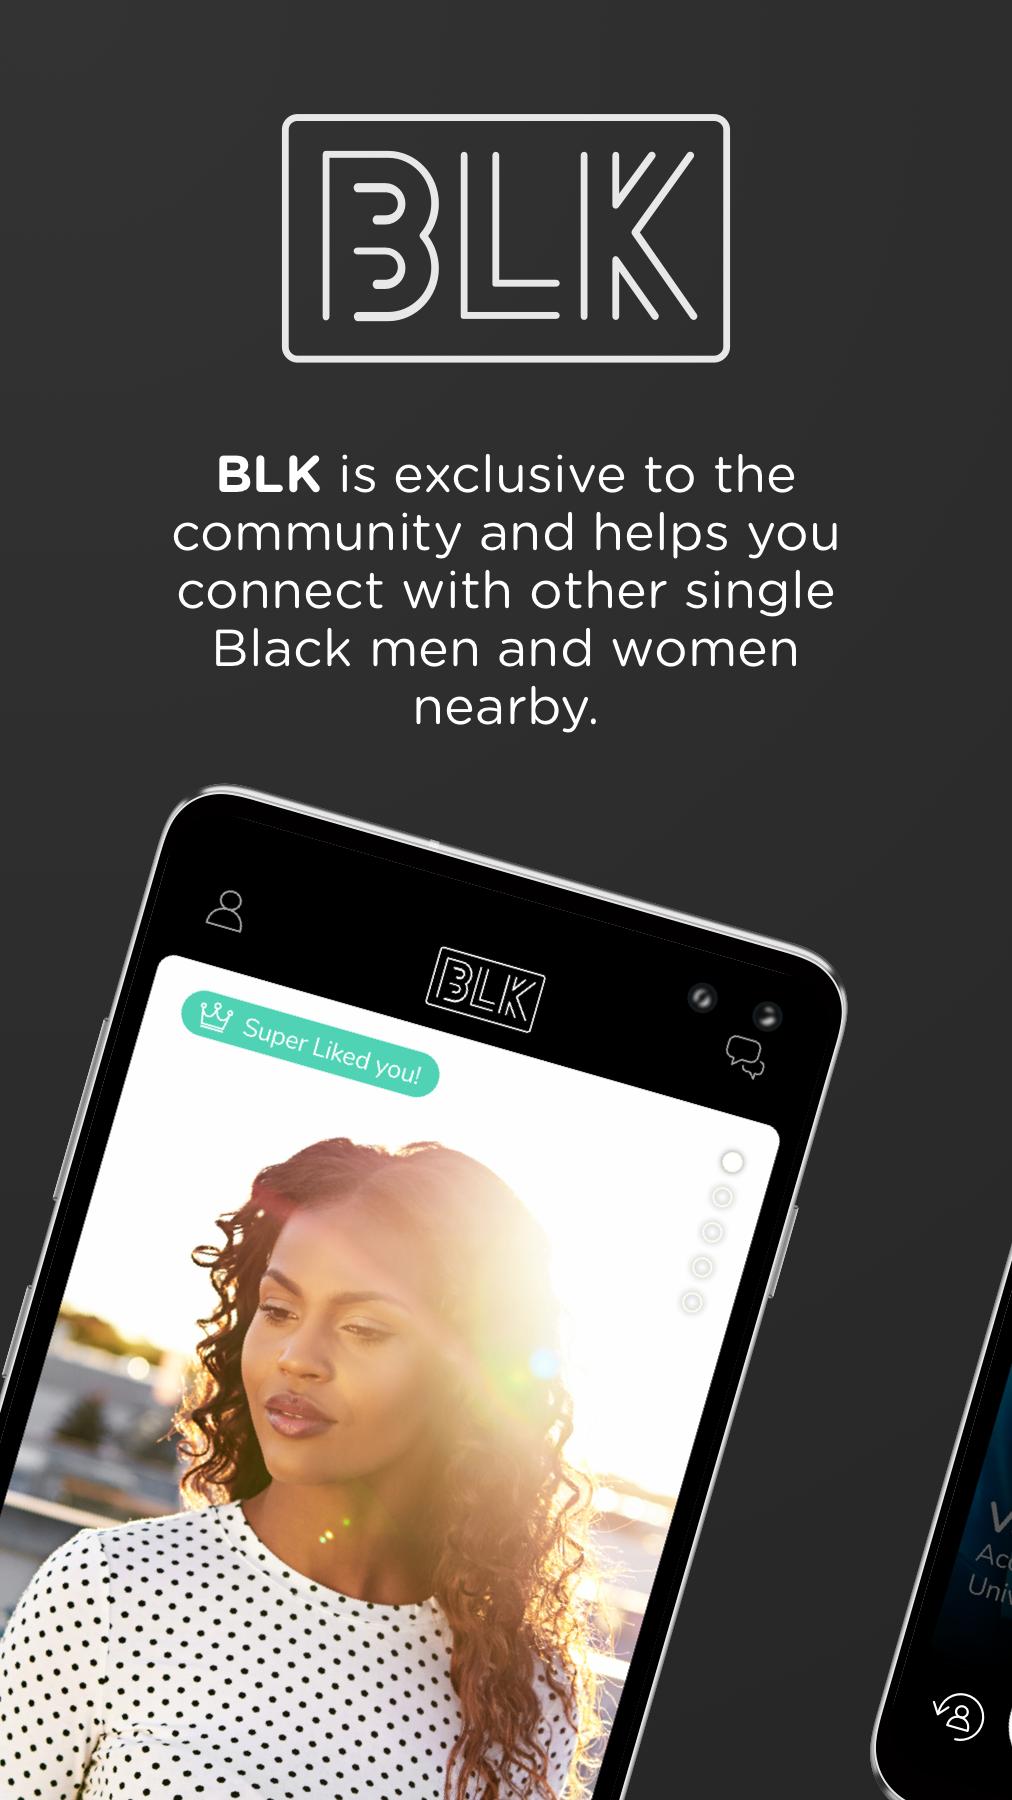 BLK Meet Black singles nearby 2.1.2 Screenshot 1